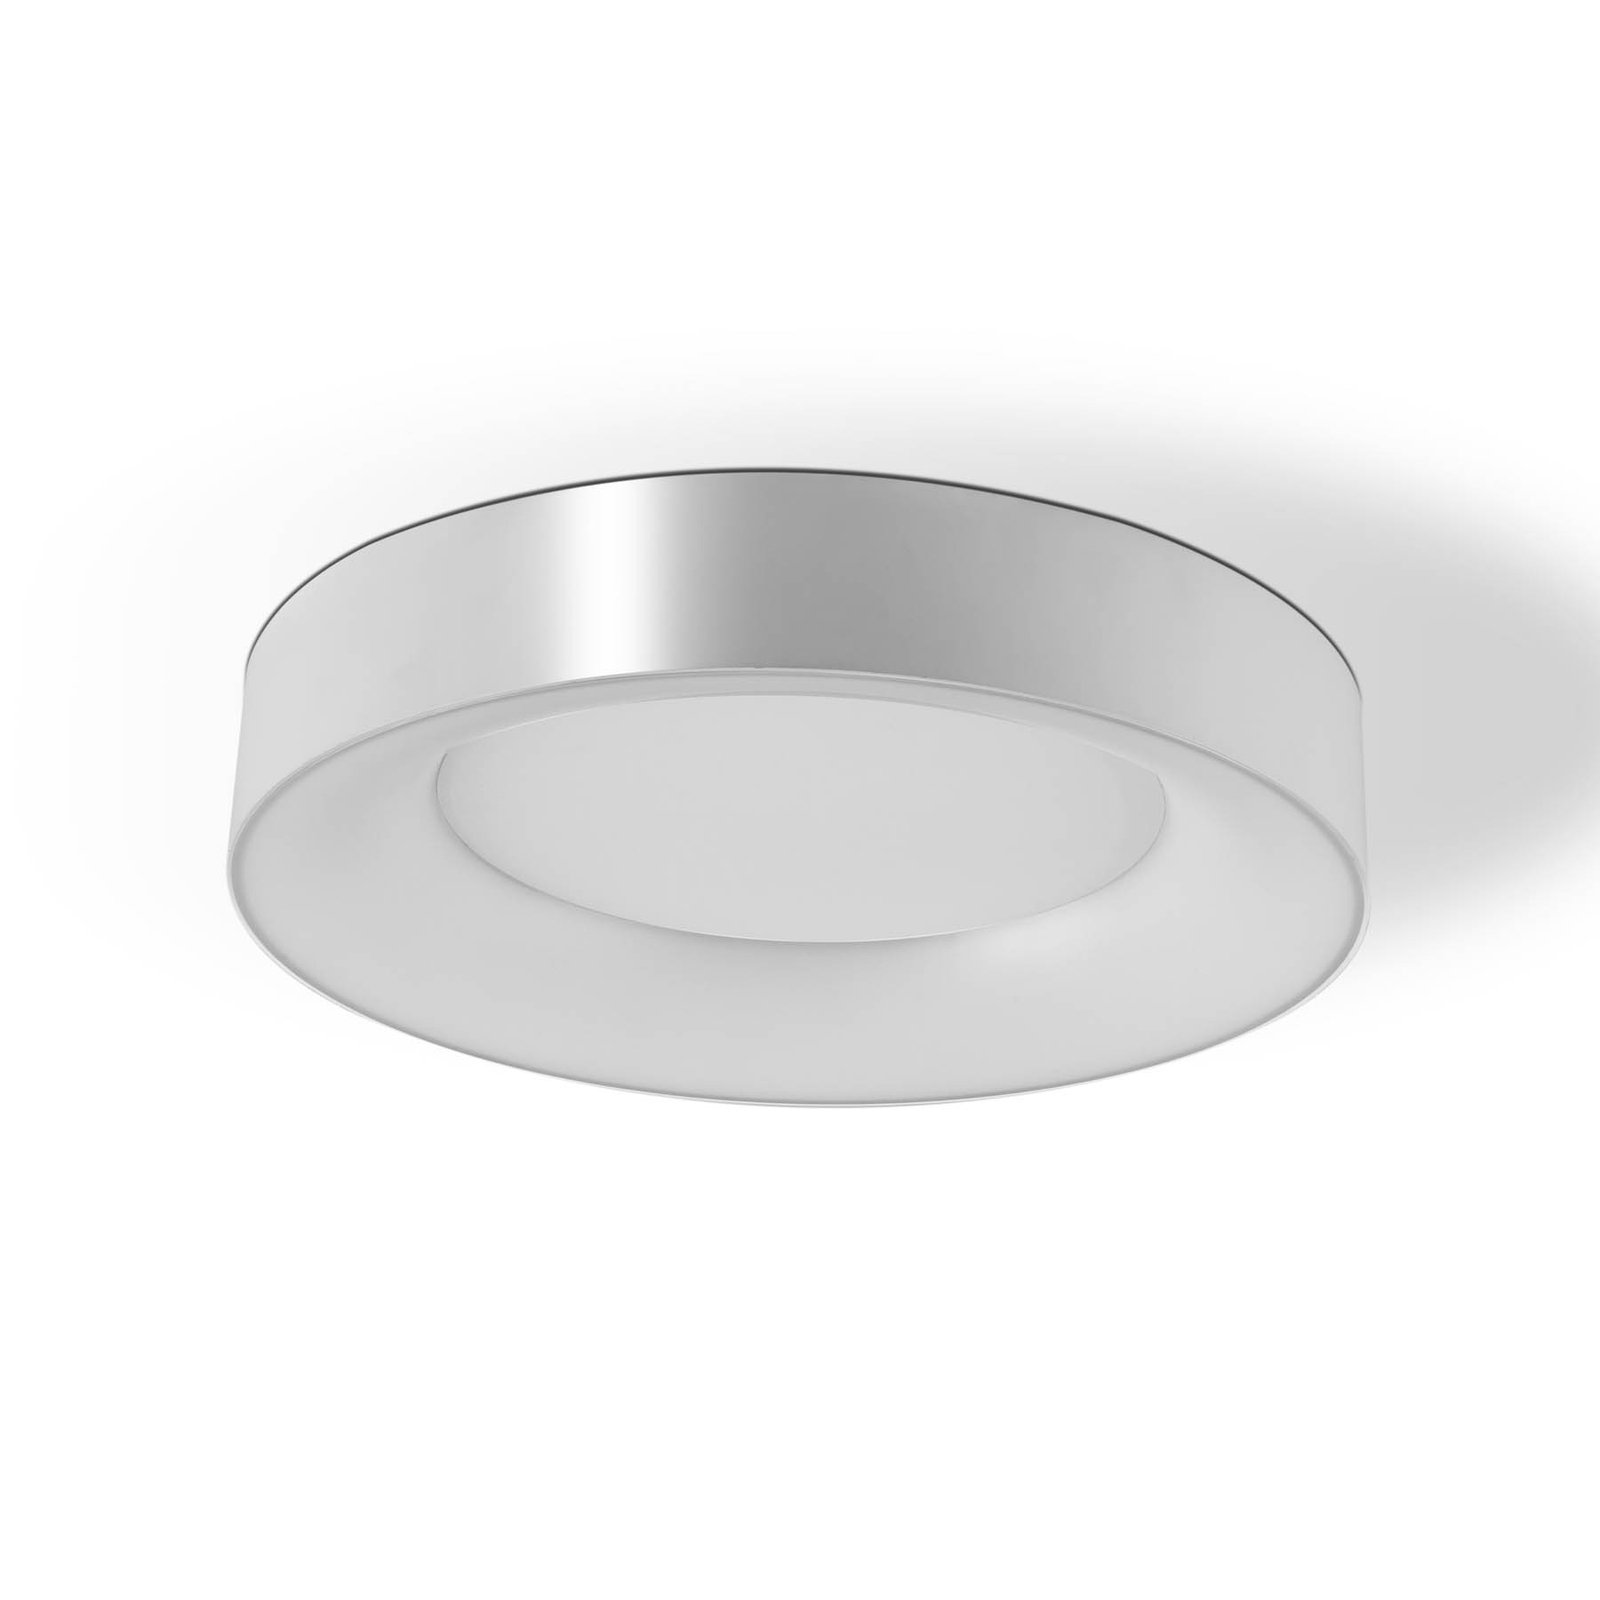 Sauro LED plafondlamp, Ø 40 cm, zilver